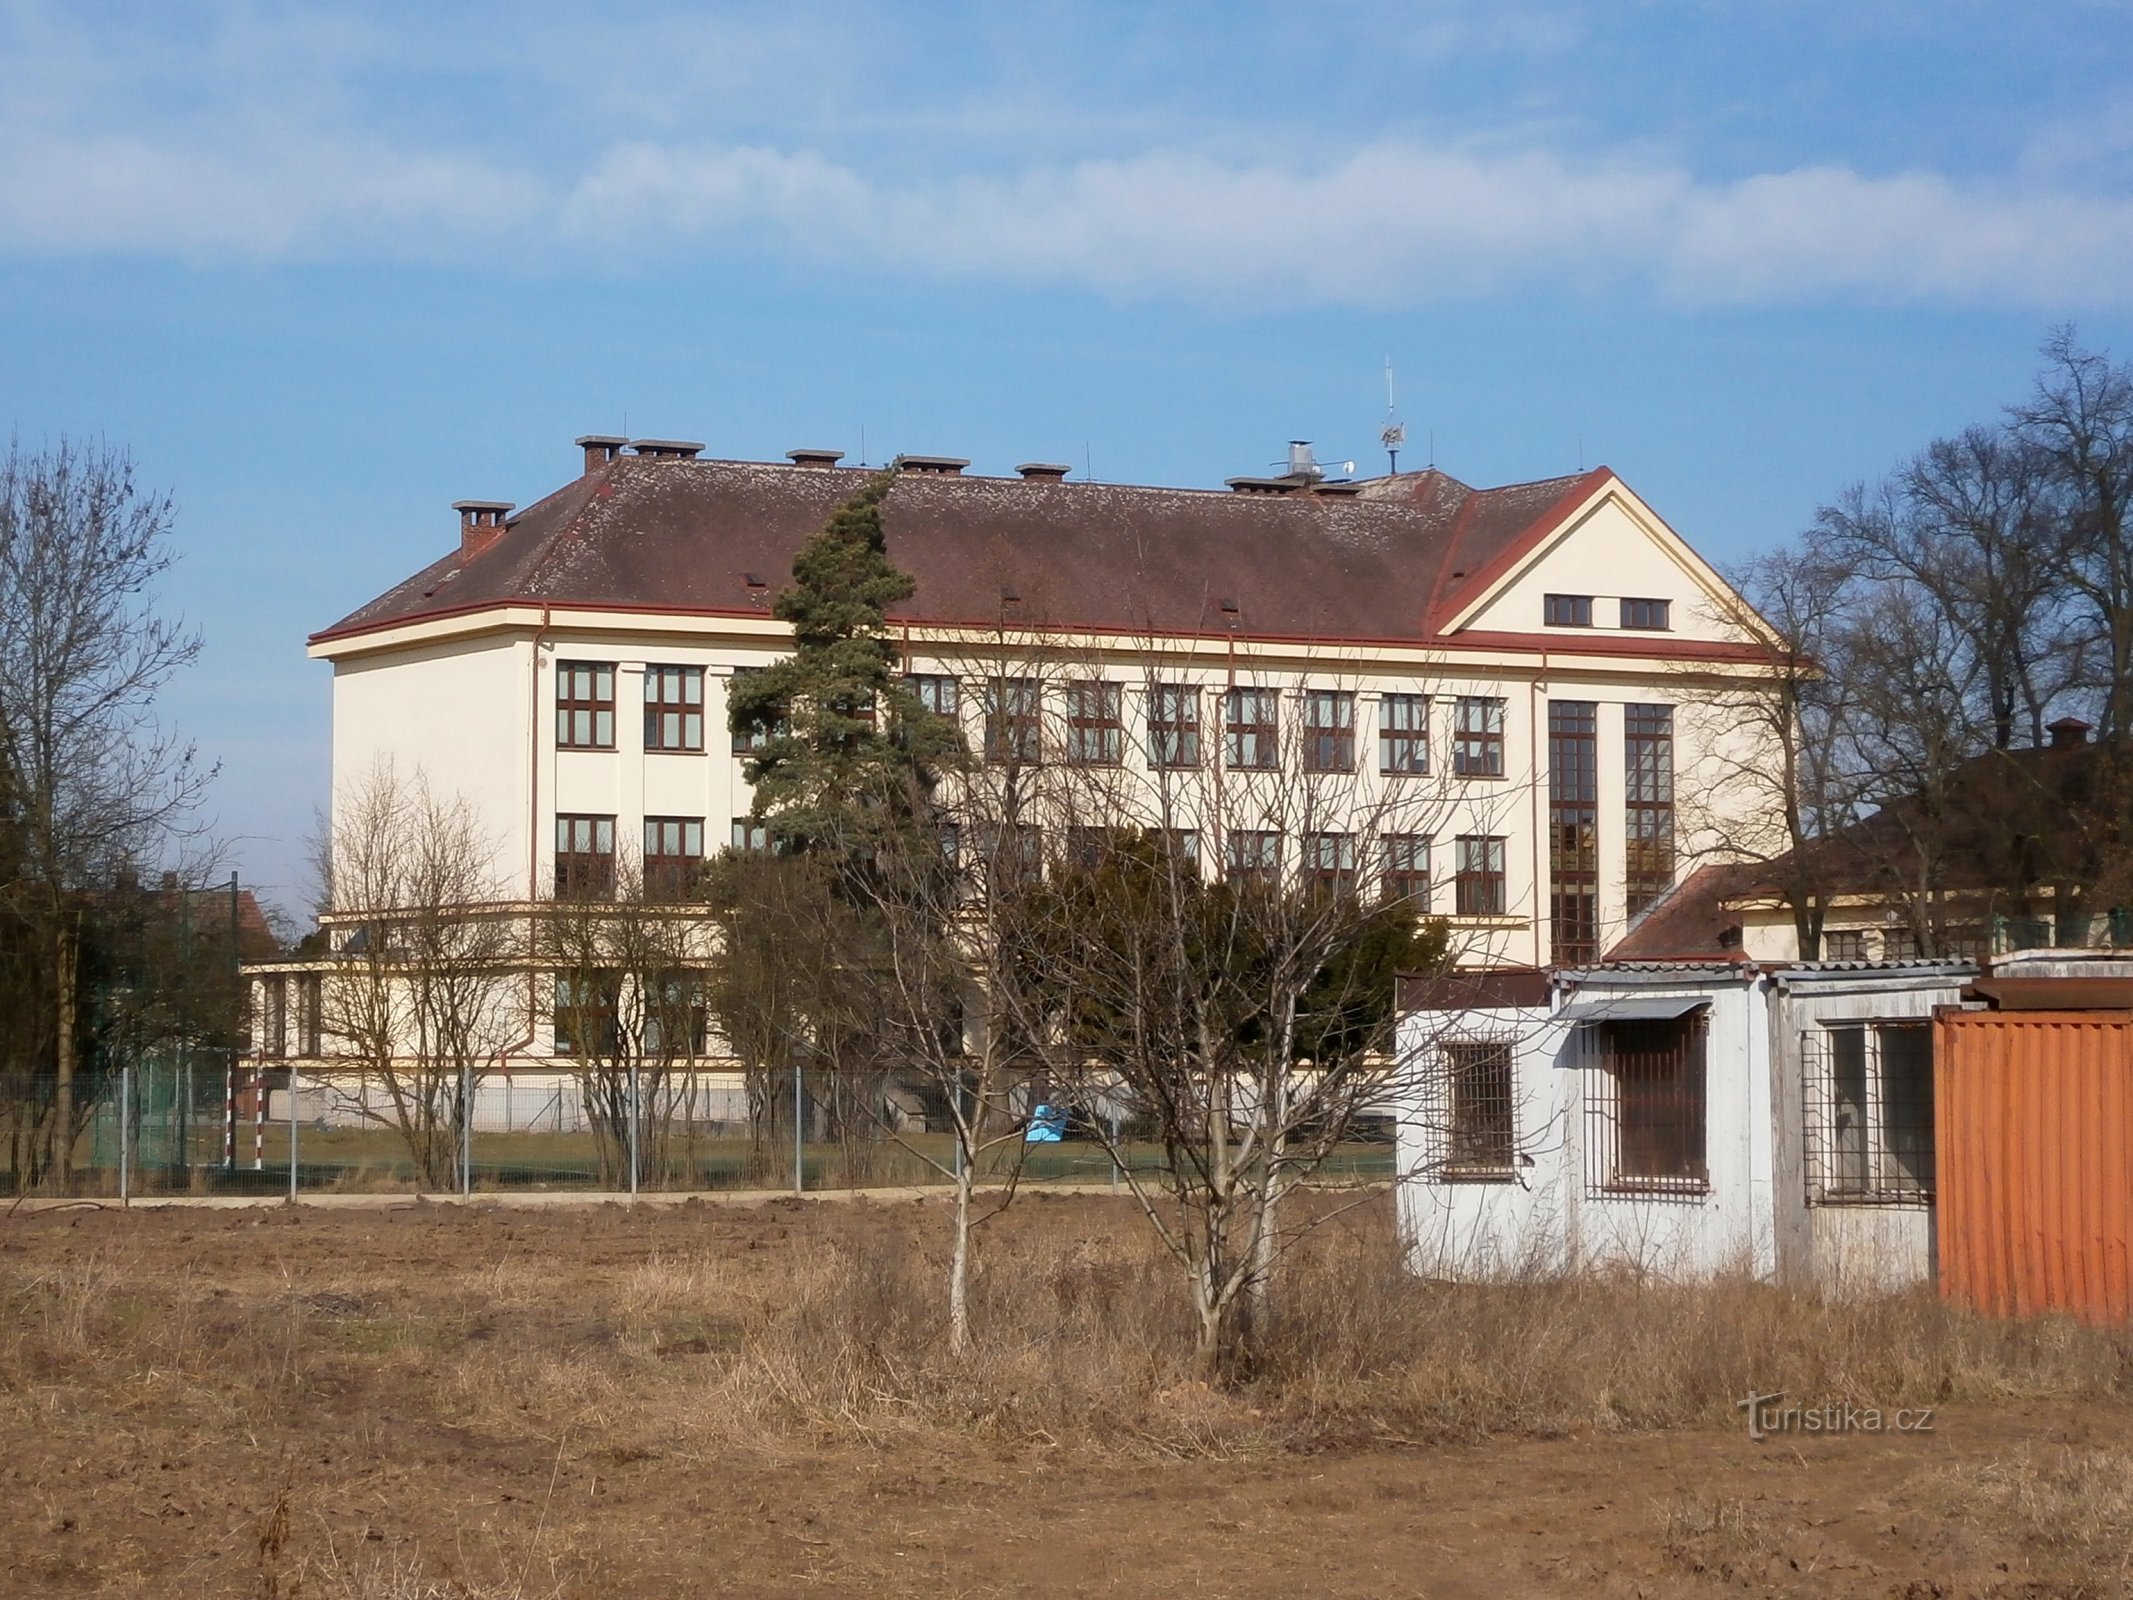 Plotiště nad Labem 的 Masaryk 小学 (Hradec Králové, 9.3.2015/XNUMX/XNUMX)